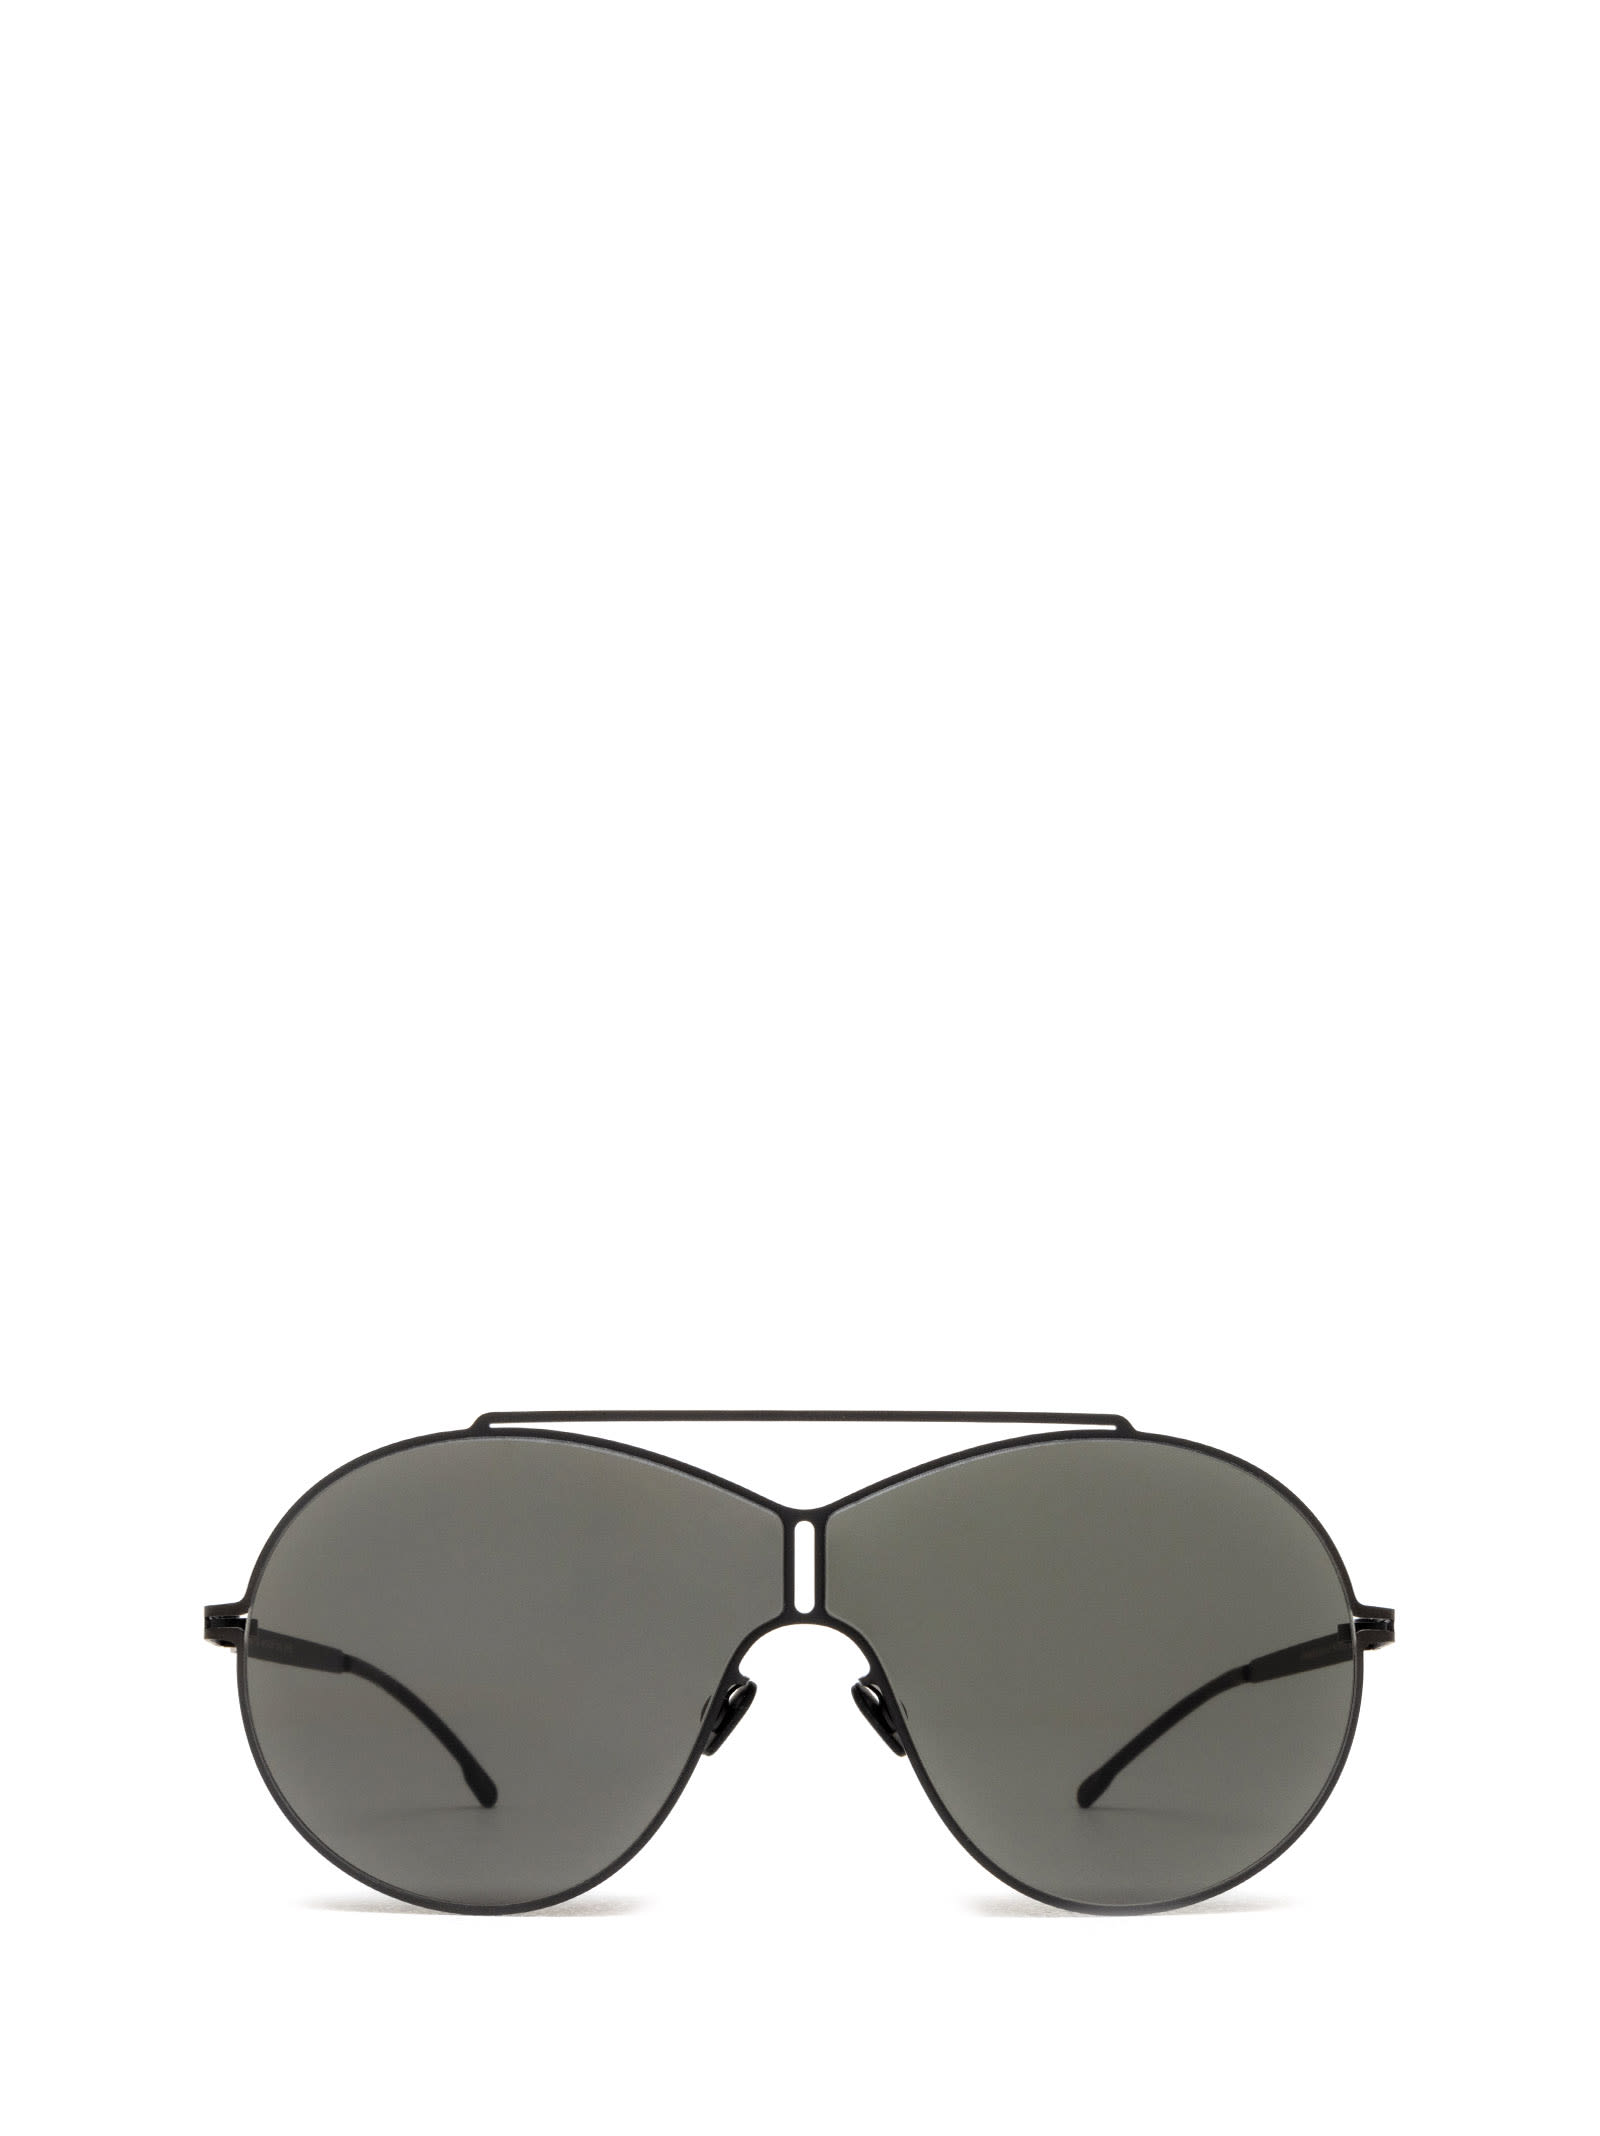 Shop Mykita Studio12.5 Sun Black Sunglasses